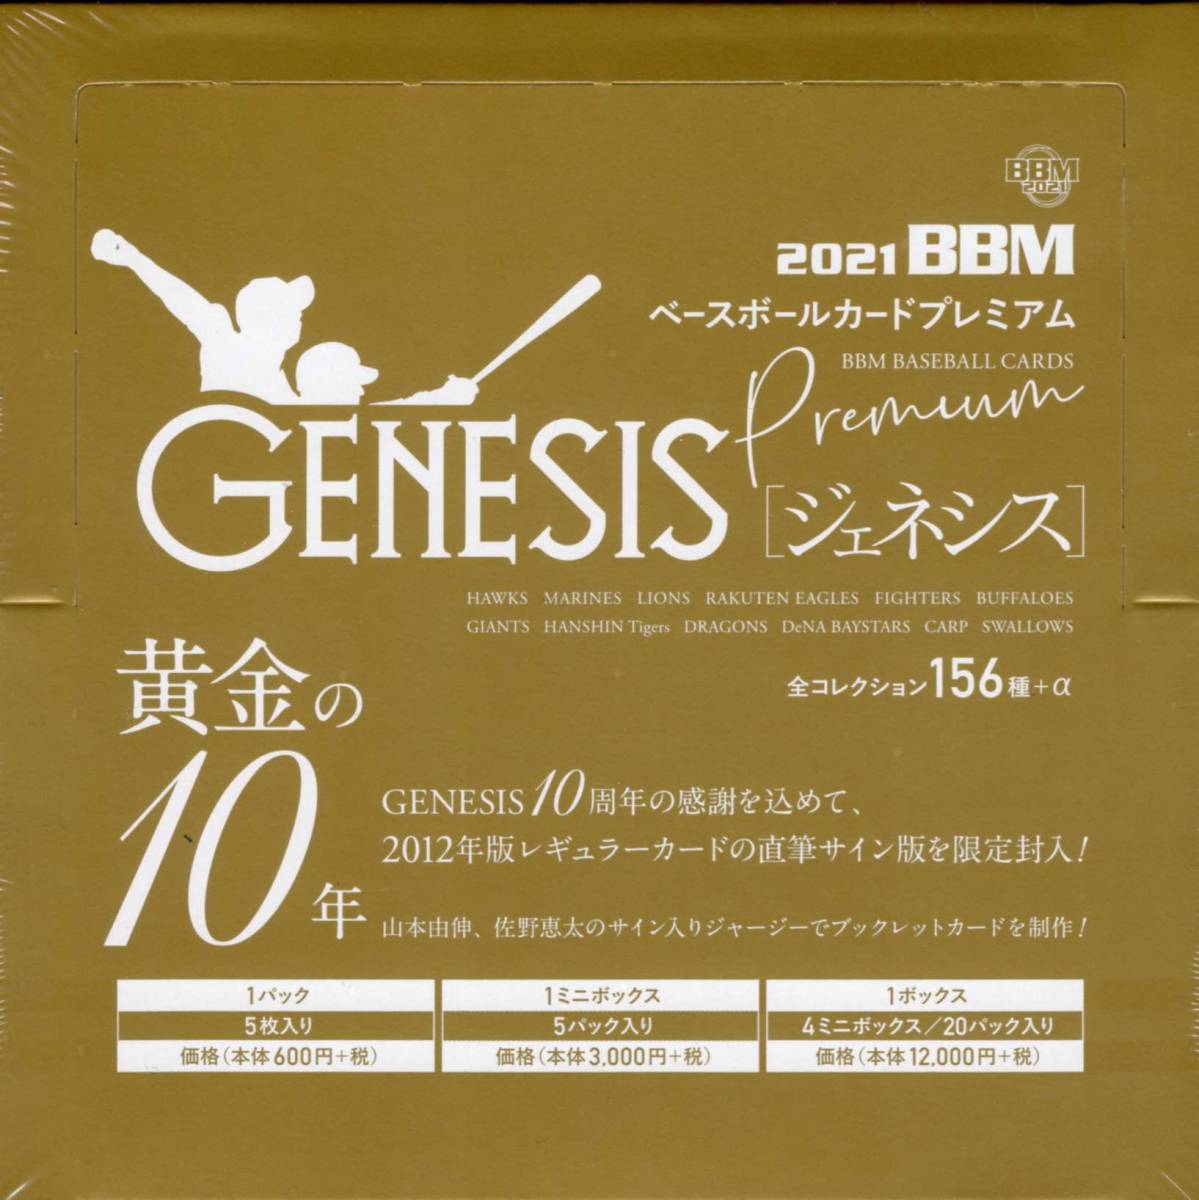 2021 BBM GENESIS BOX(ボックス)｜売買されたオークション情報、yahooの商品情報をアーカイブ公開 - オークファン